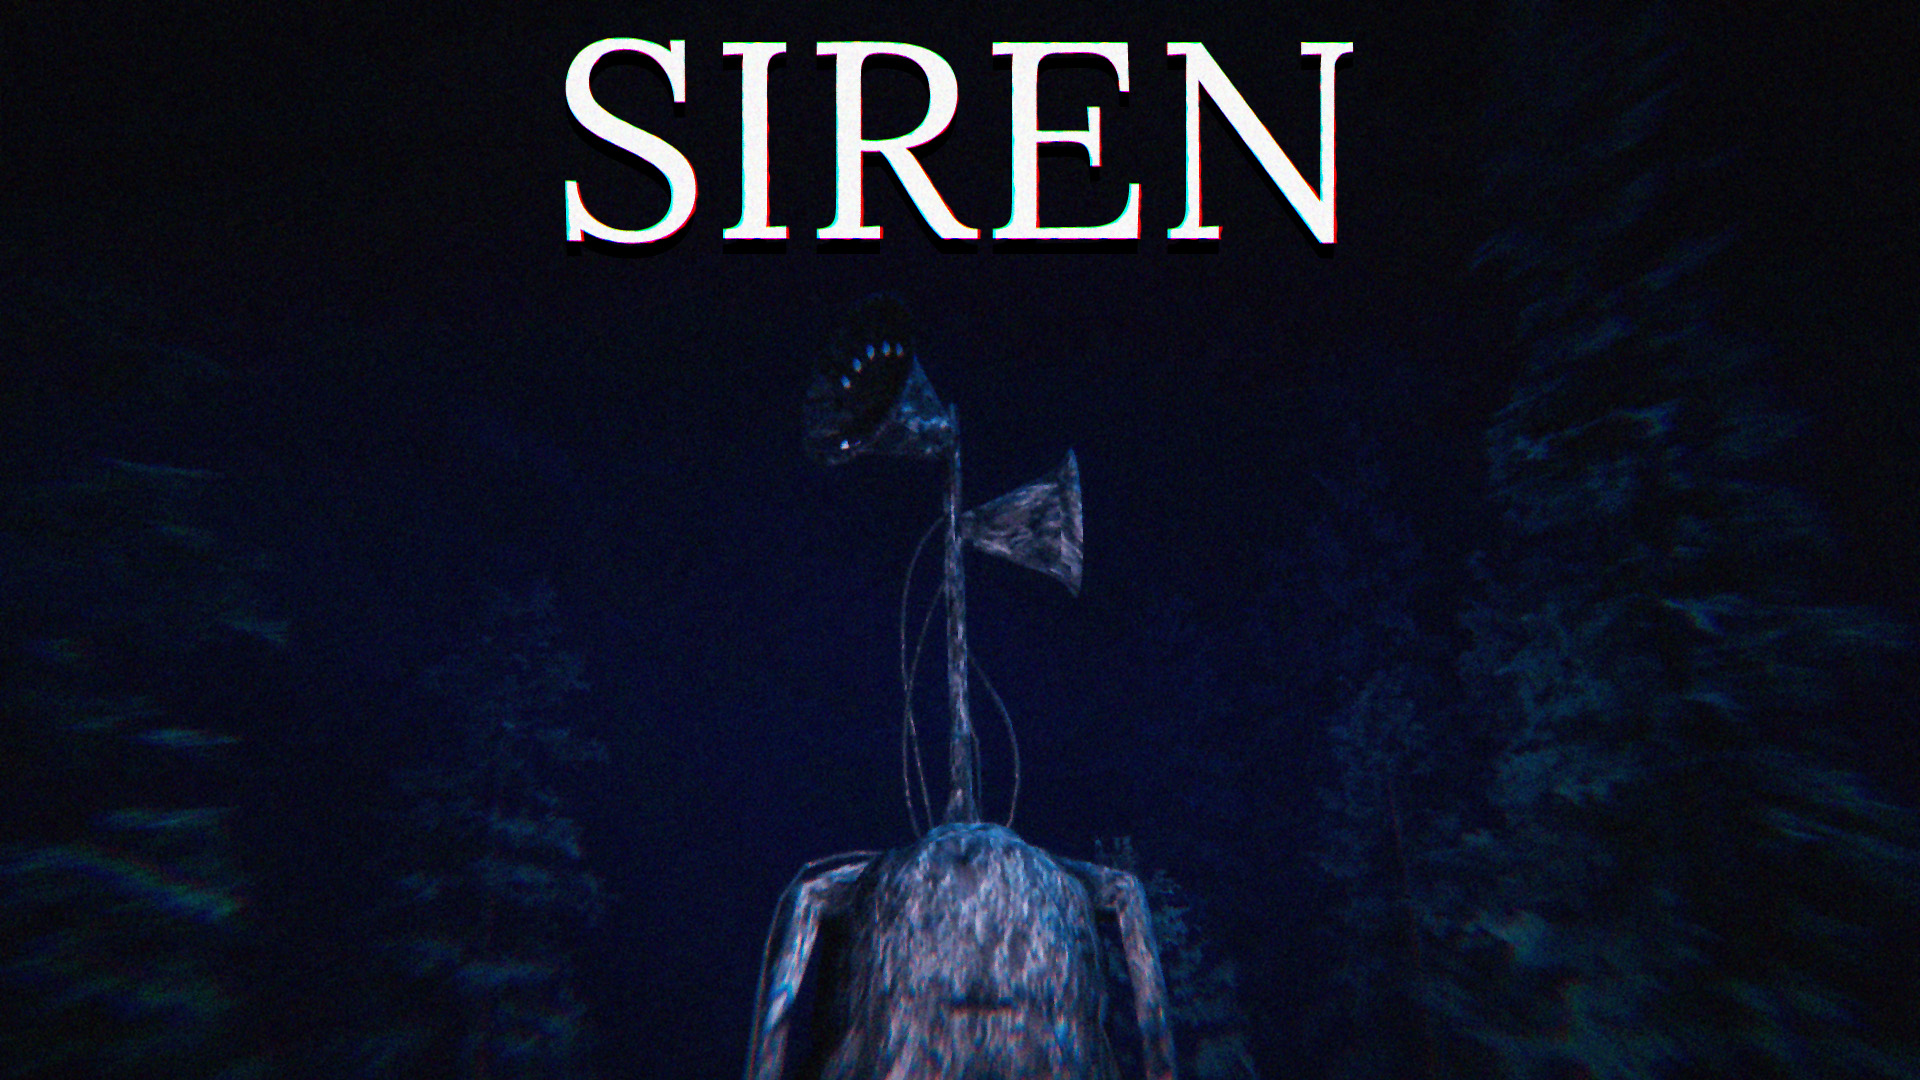 Siren head the game